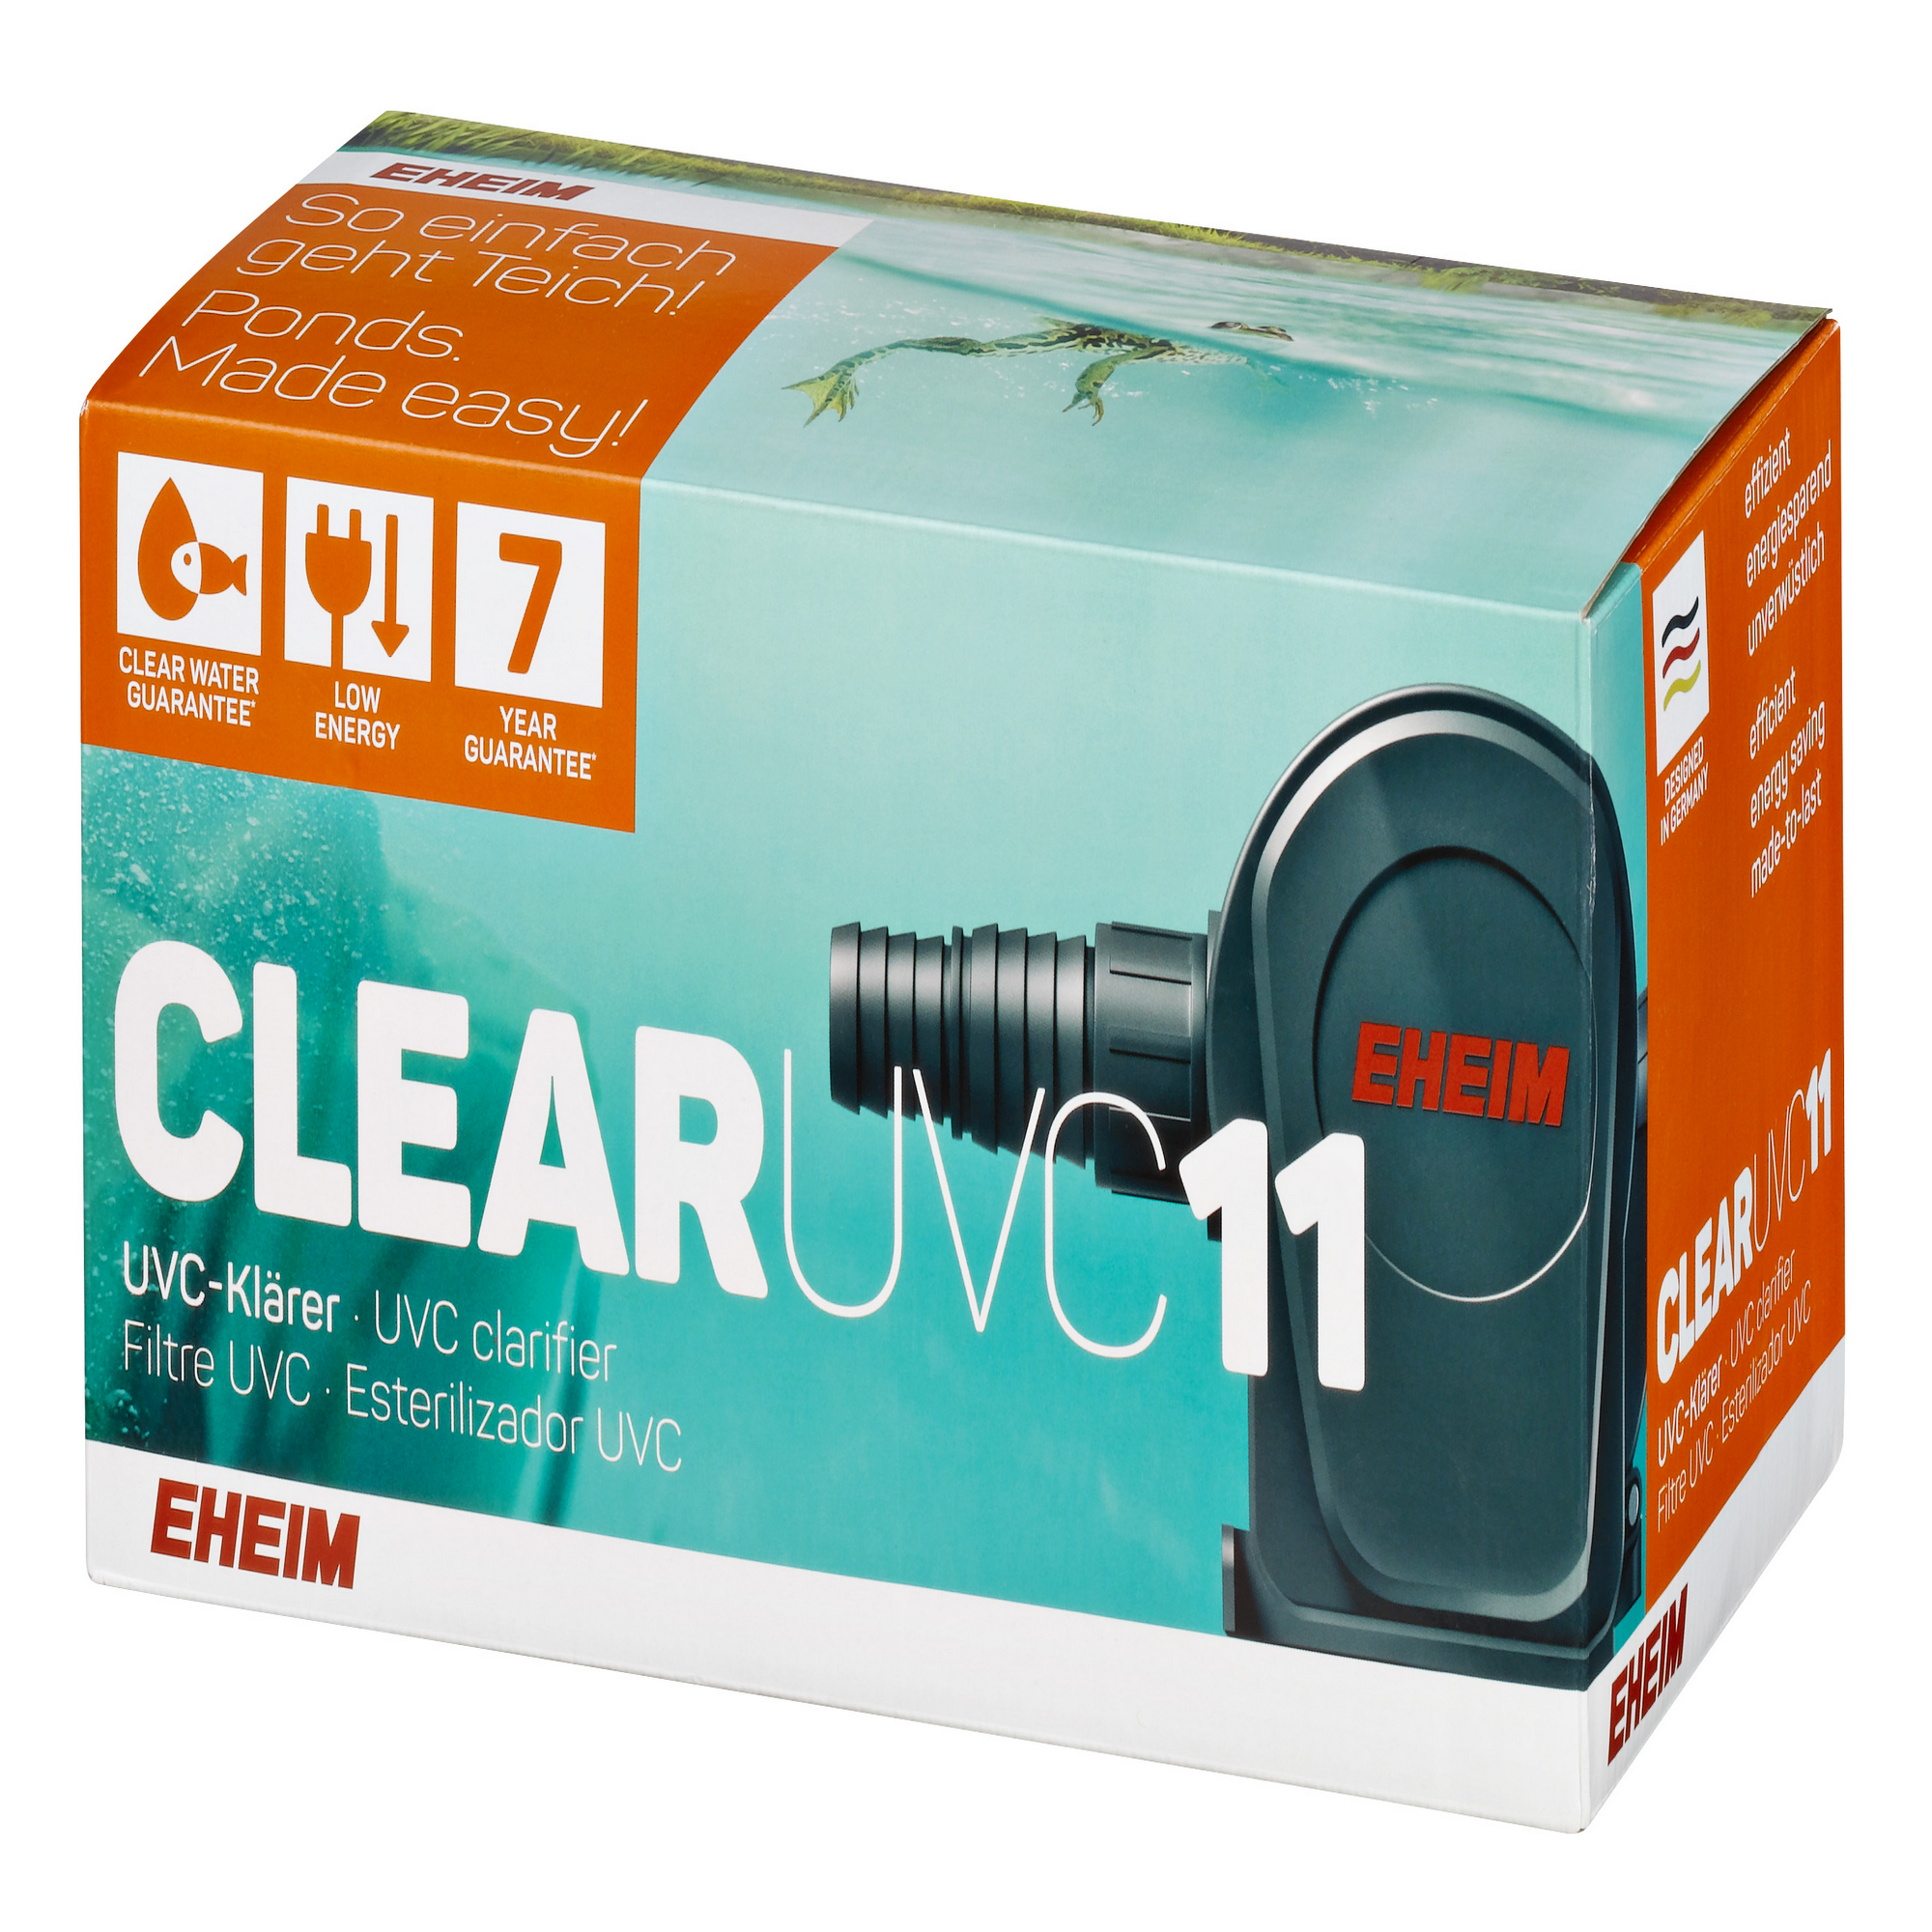 EHEIM CLEAR UVC 11 UVC-Klärer + product picture